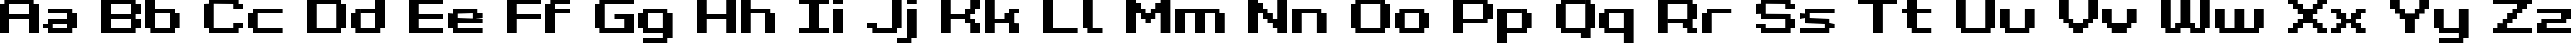 Пример написания английского алфавита шрифтом Grixel Kyrou 7 Wide Bold